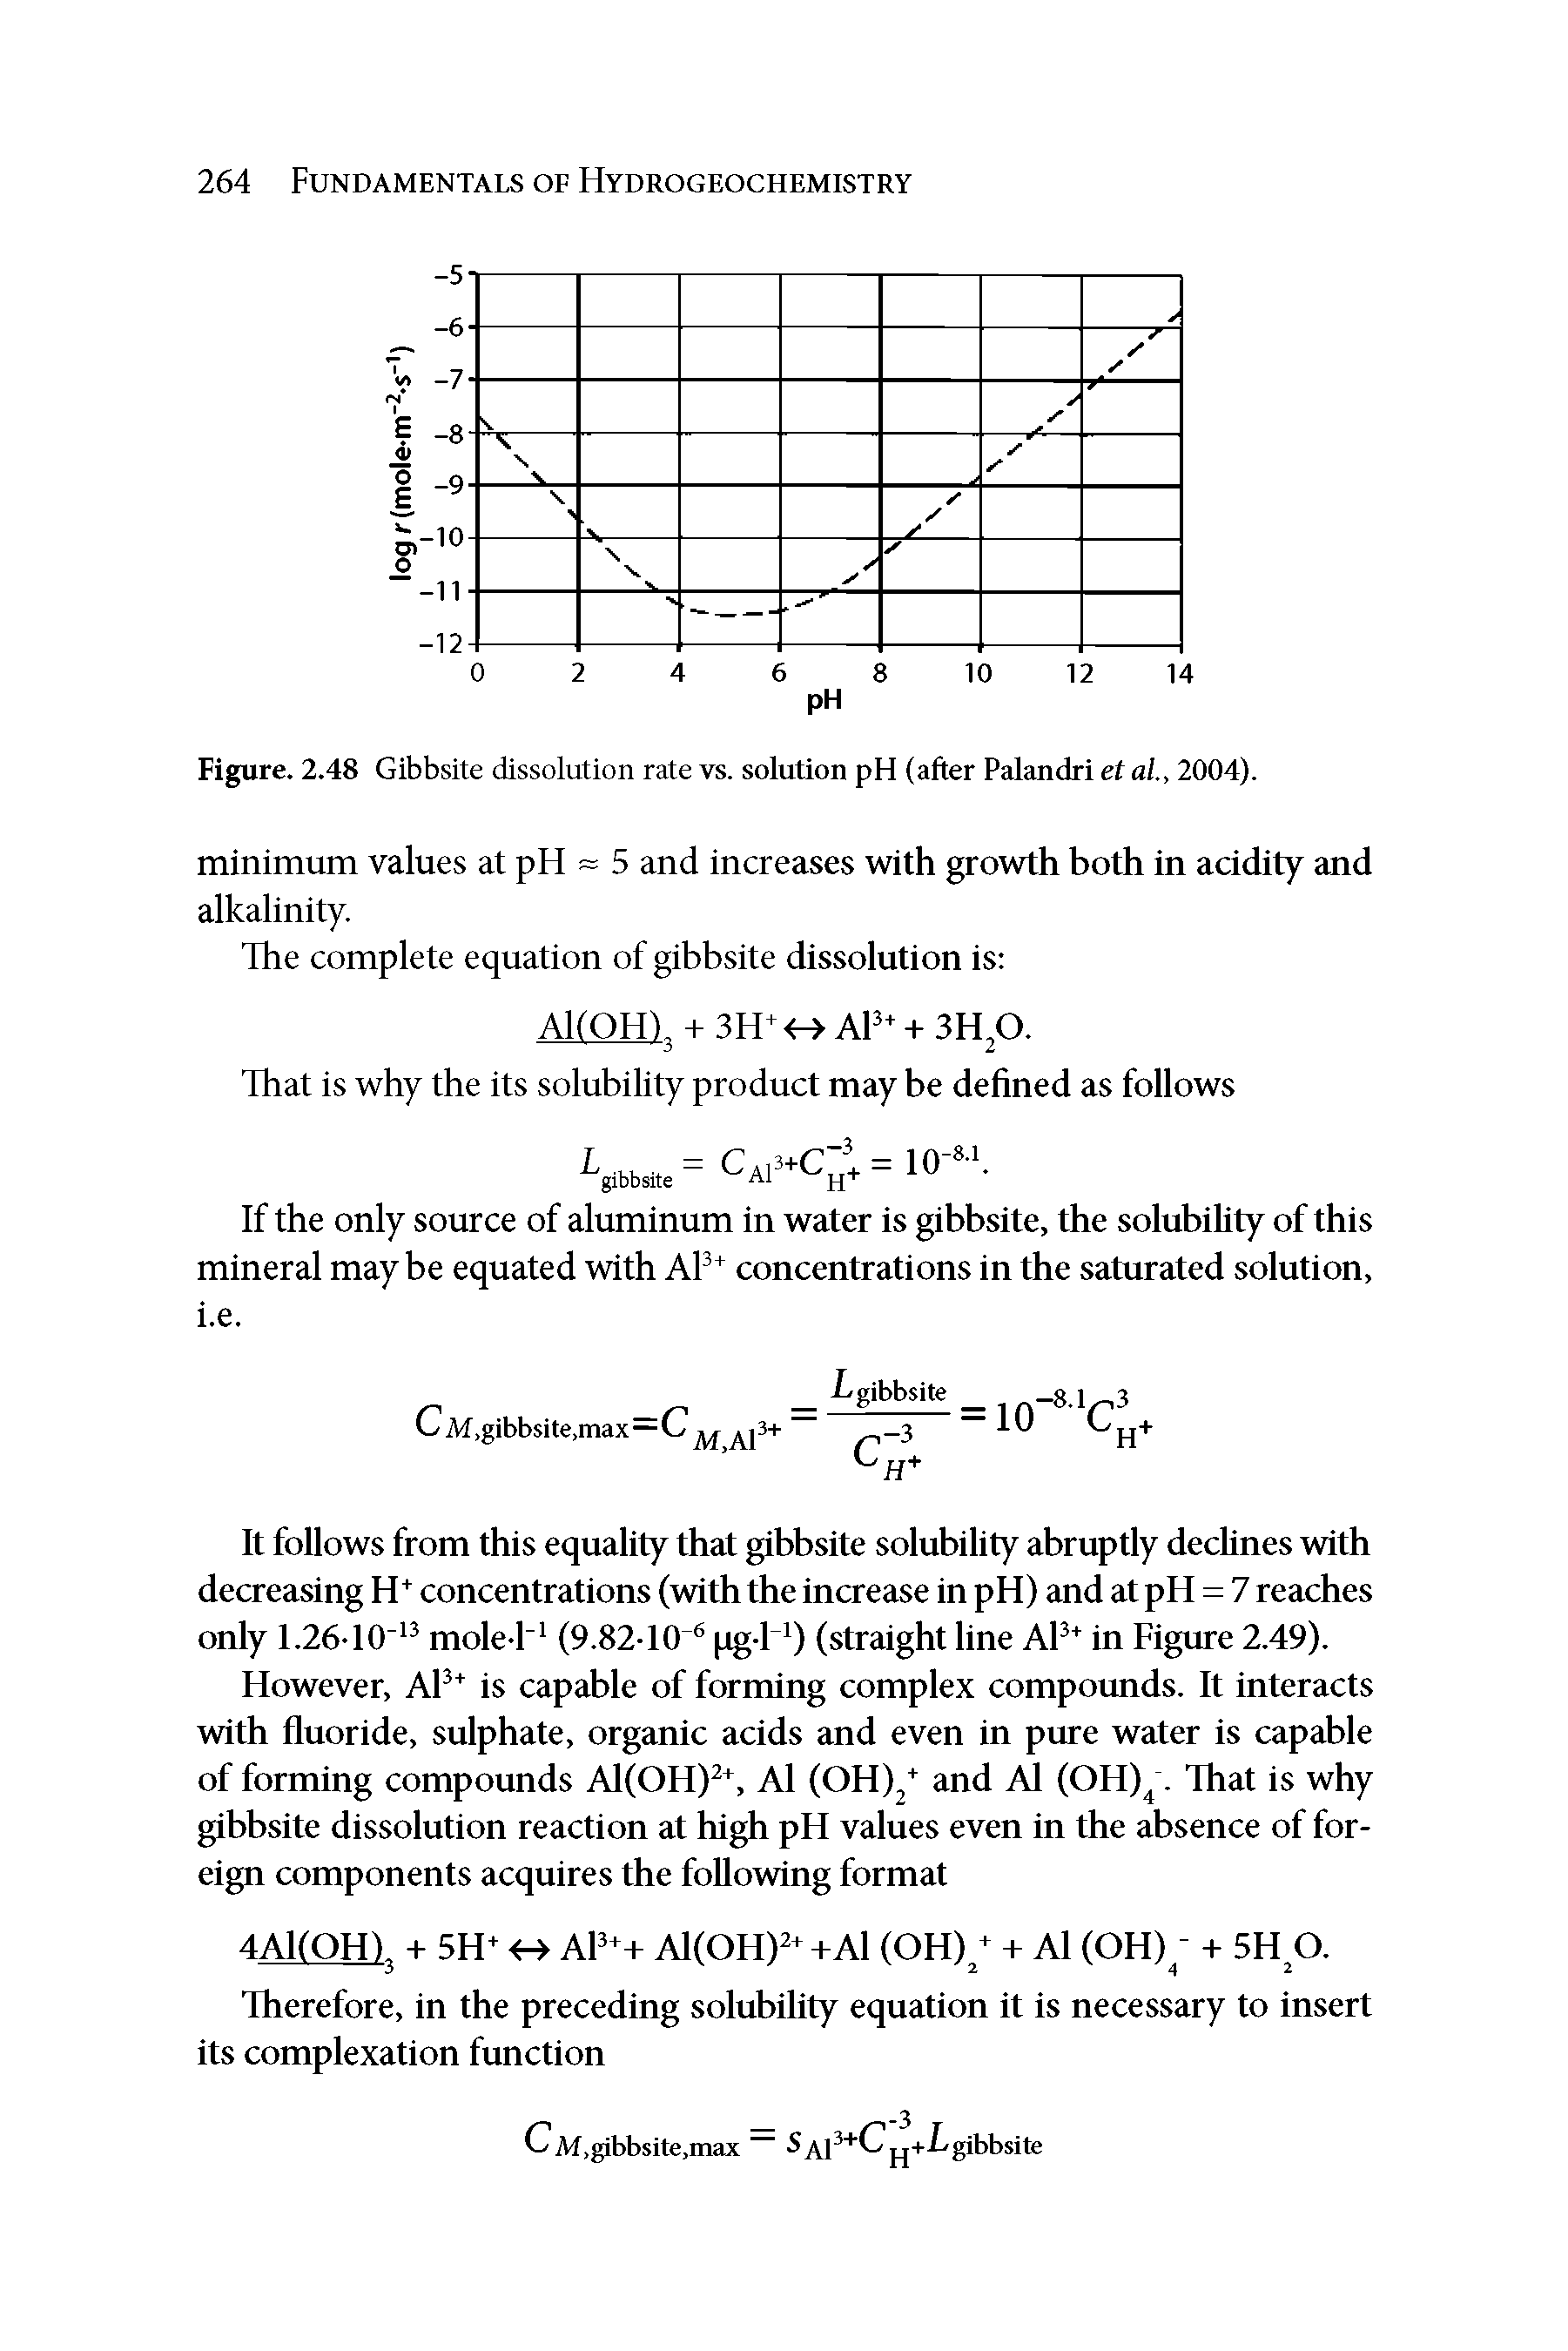 Figure. 2.48 Gibbsite dissolution rate vs. solution pH (after Palandri et al.y 2004).